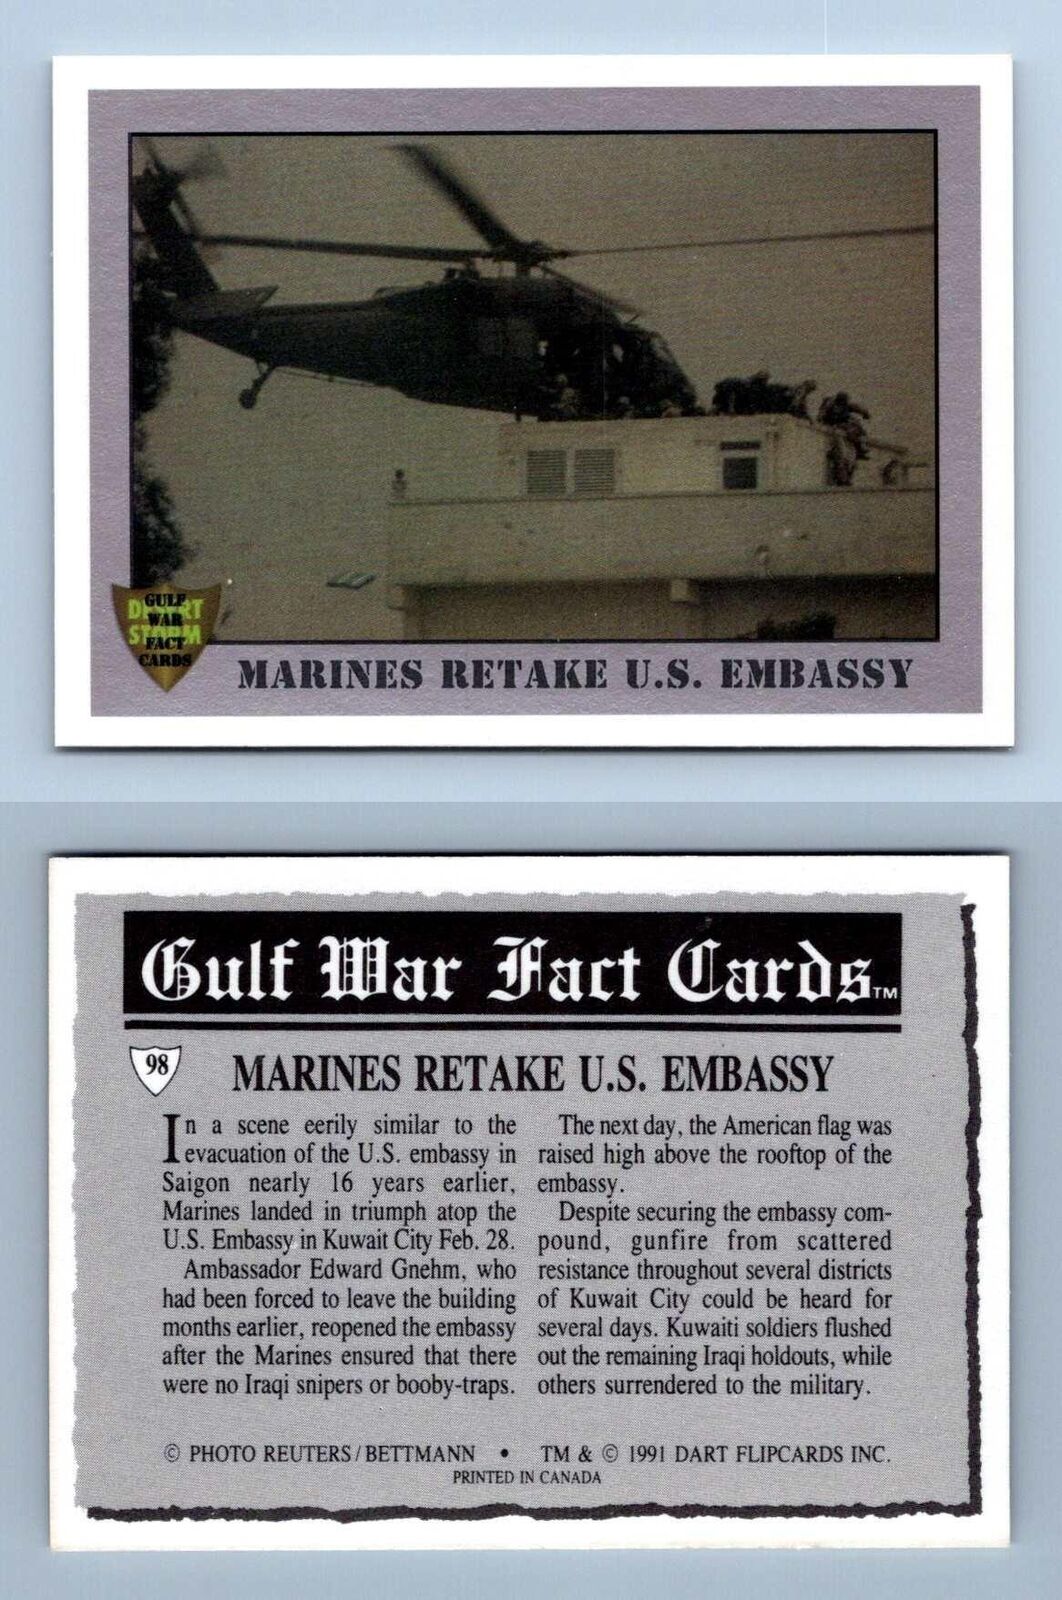 Marines Retake U.S. Embassy #98 Gulf War 1991 Dart Fact Card